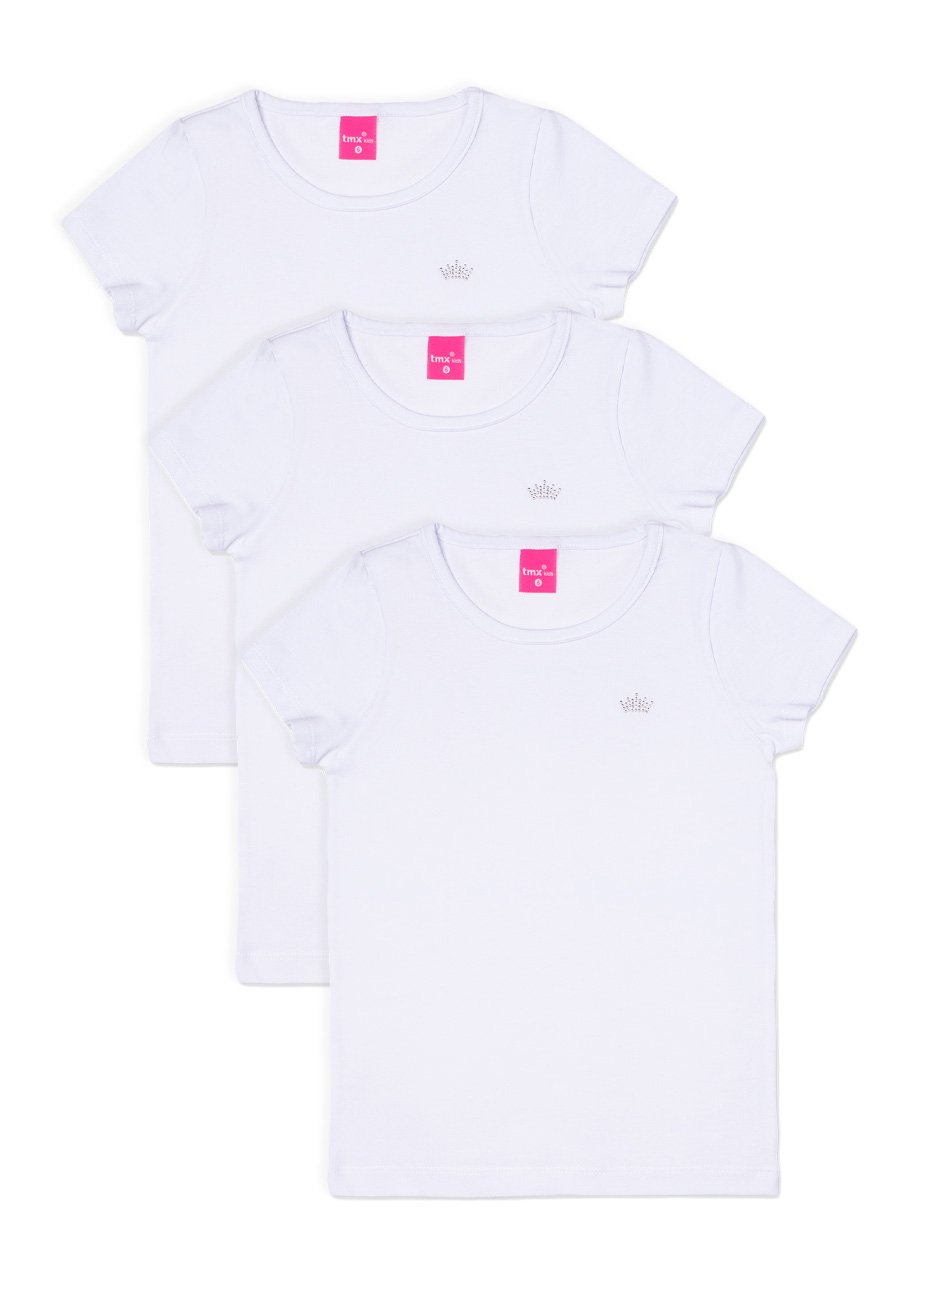 Camisetas Térmicas UV Kit 4 - Unissex